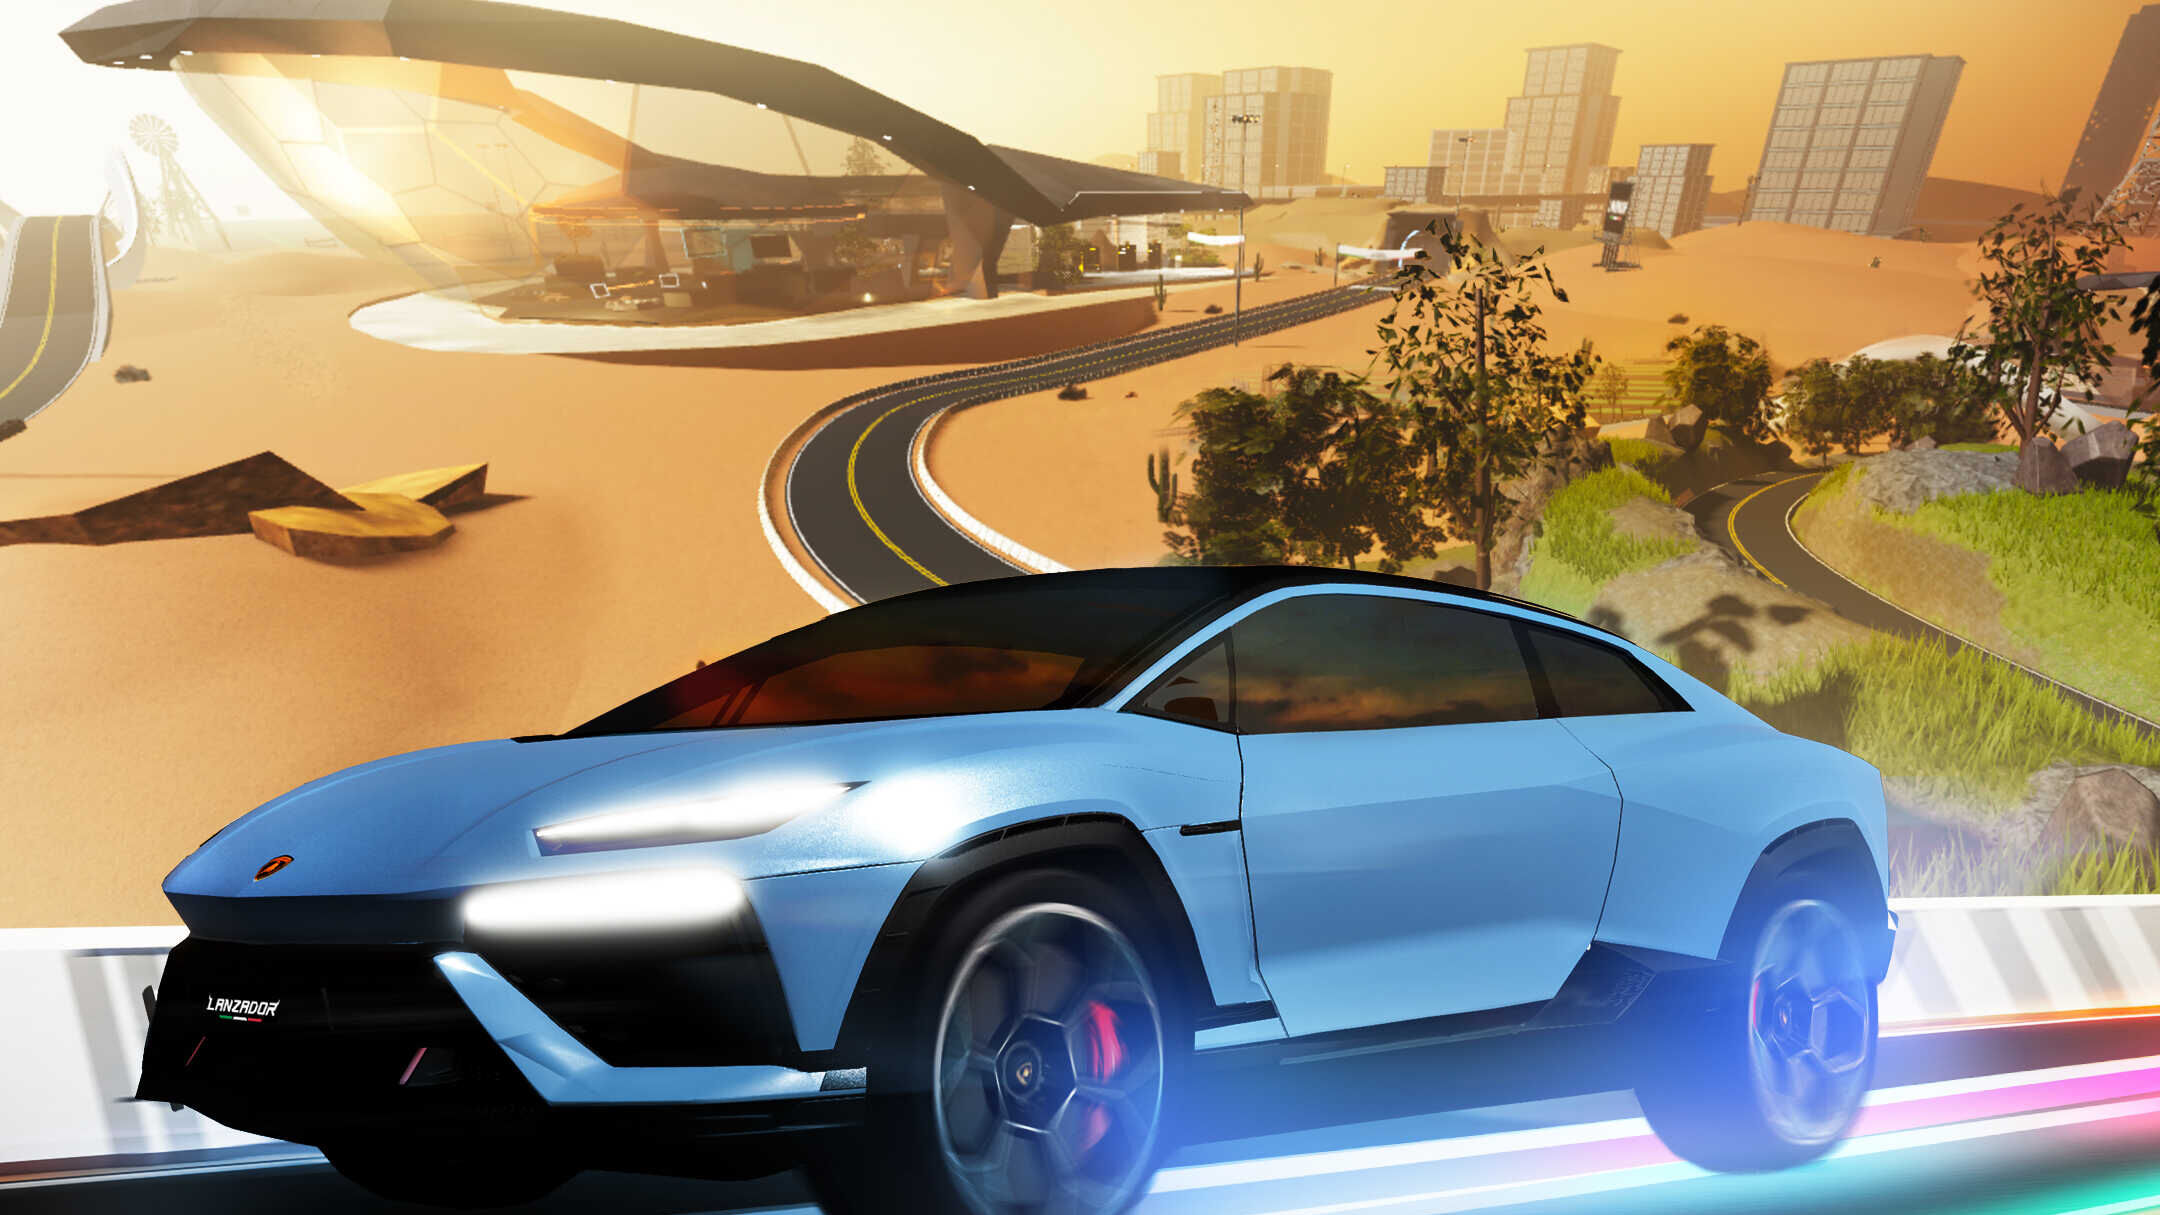 Lanzador: Automobili Lamborghini এর ইলেকট্রিক সুপারকার Roblox এ রয়েছে, একটি 3D ইমারসিভ প্ল্যাটফর্ম